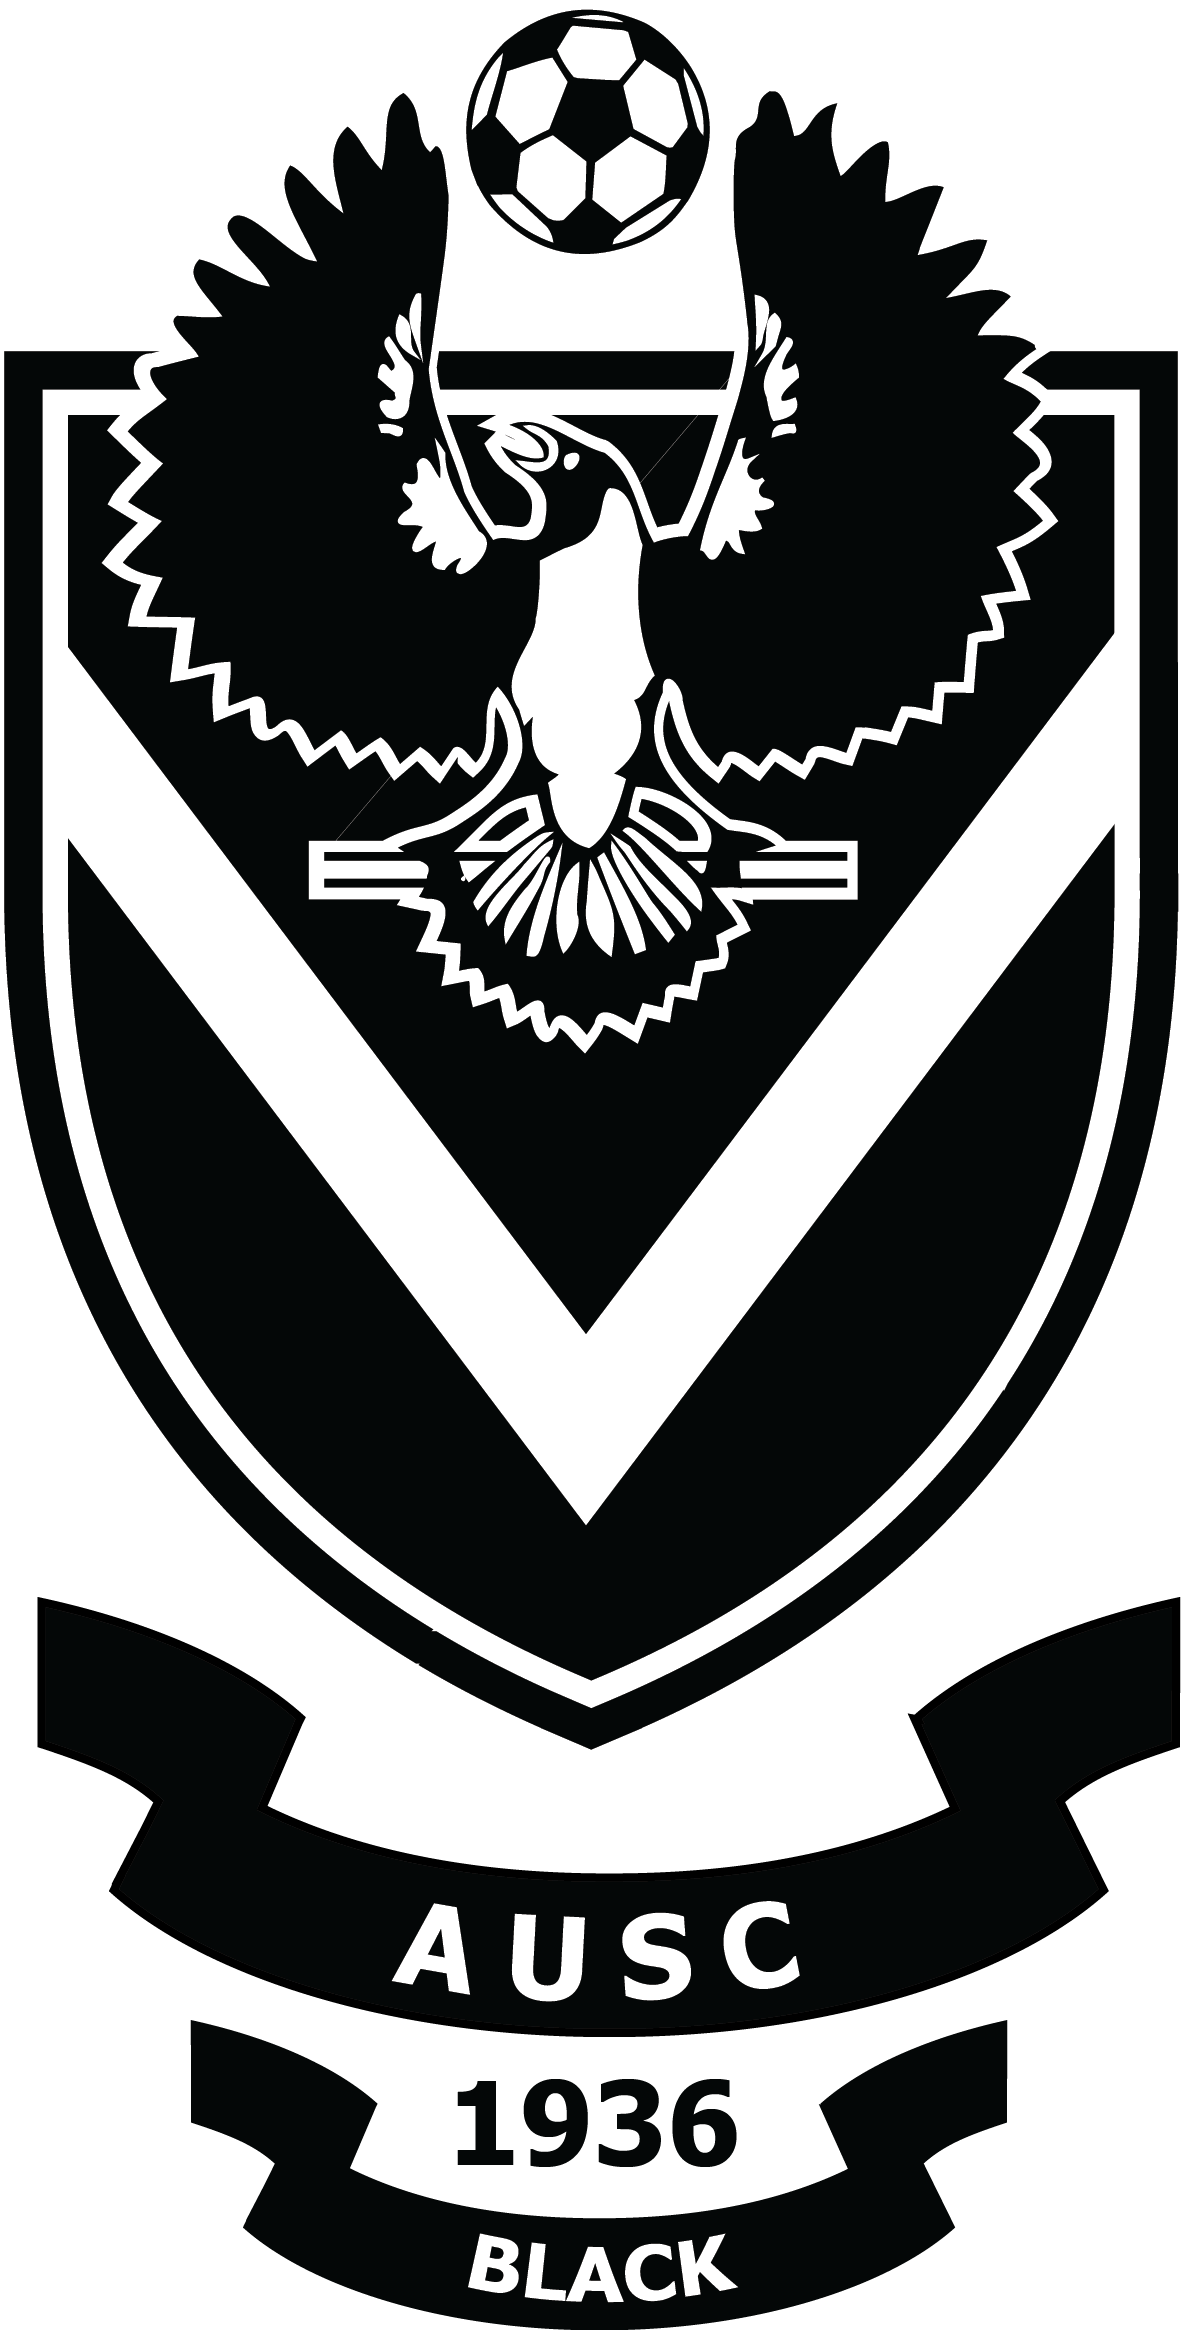 AUSC Black logo